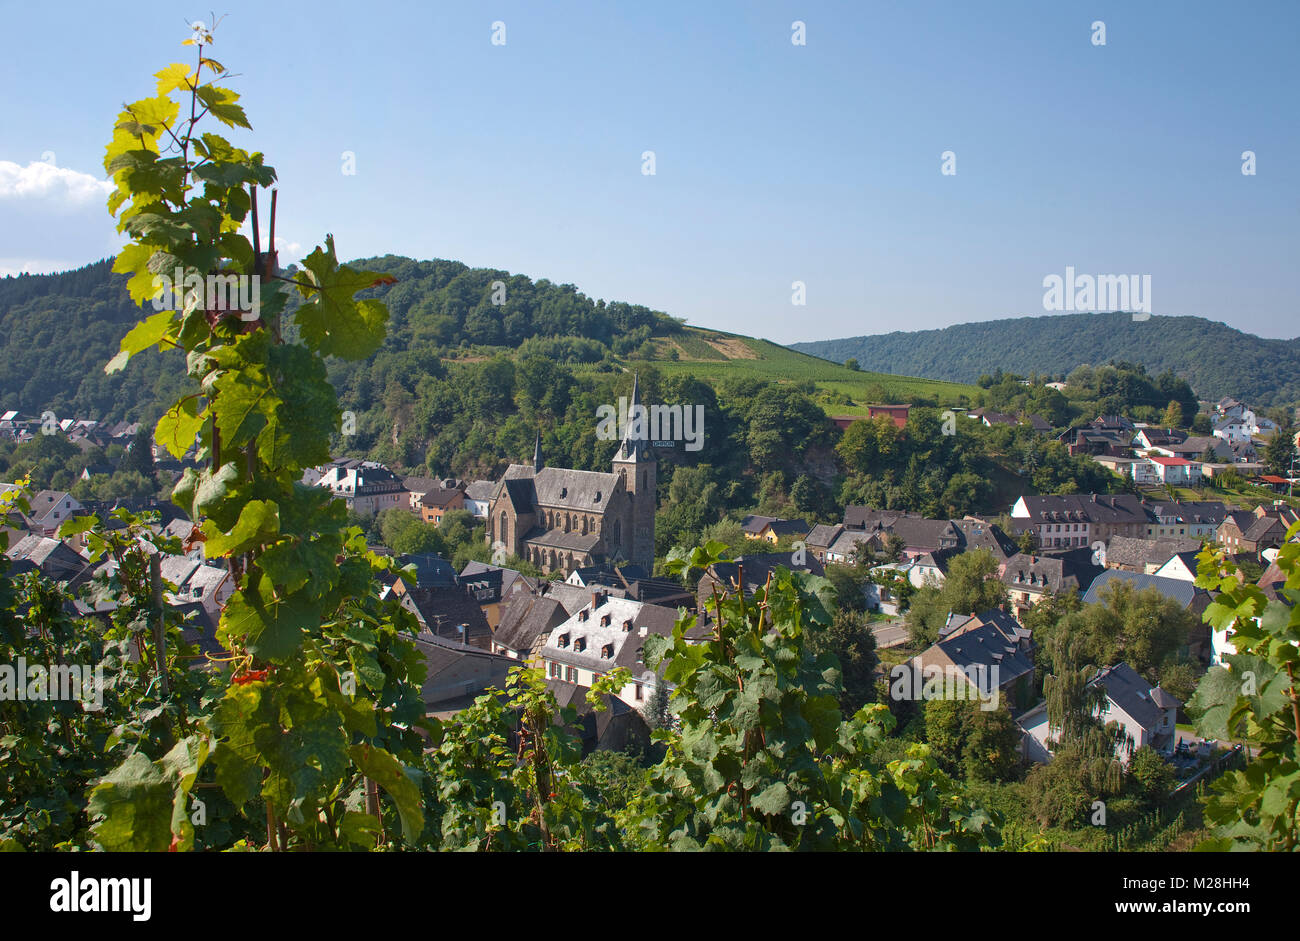 The wine village Dhron part of Neumagen-Dhron, Moselle river, Rhineland-Palatinate, Germany, Europe Stock Photo